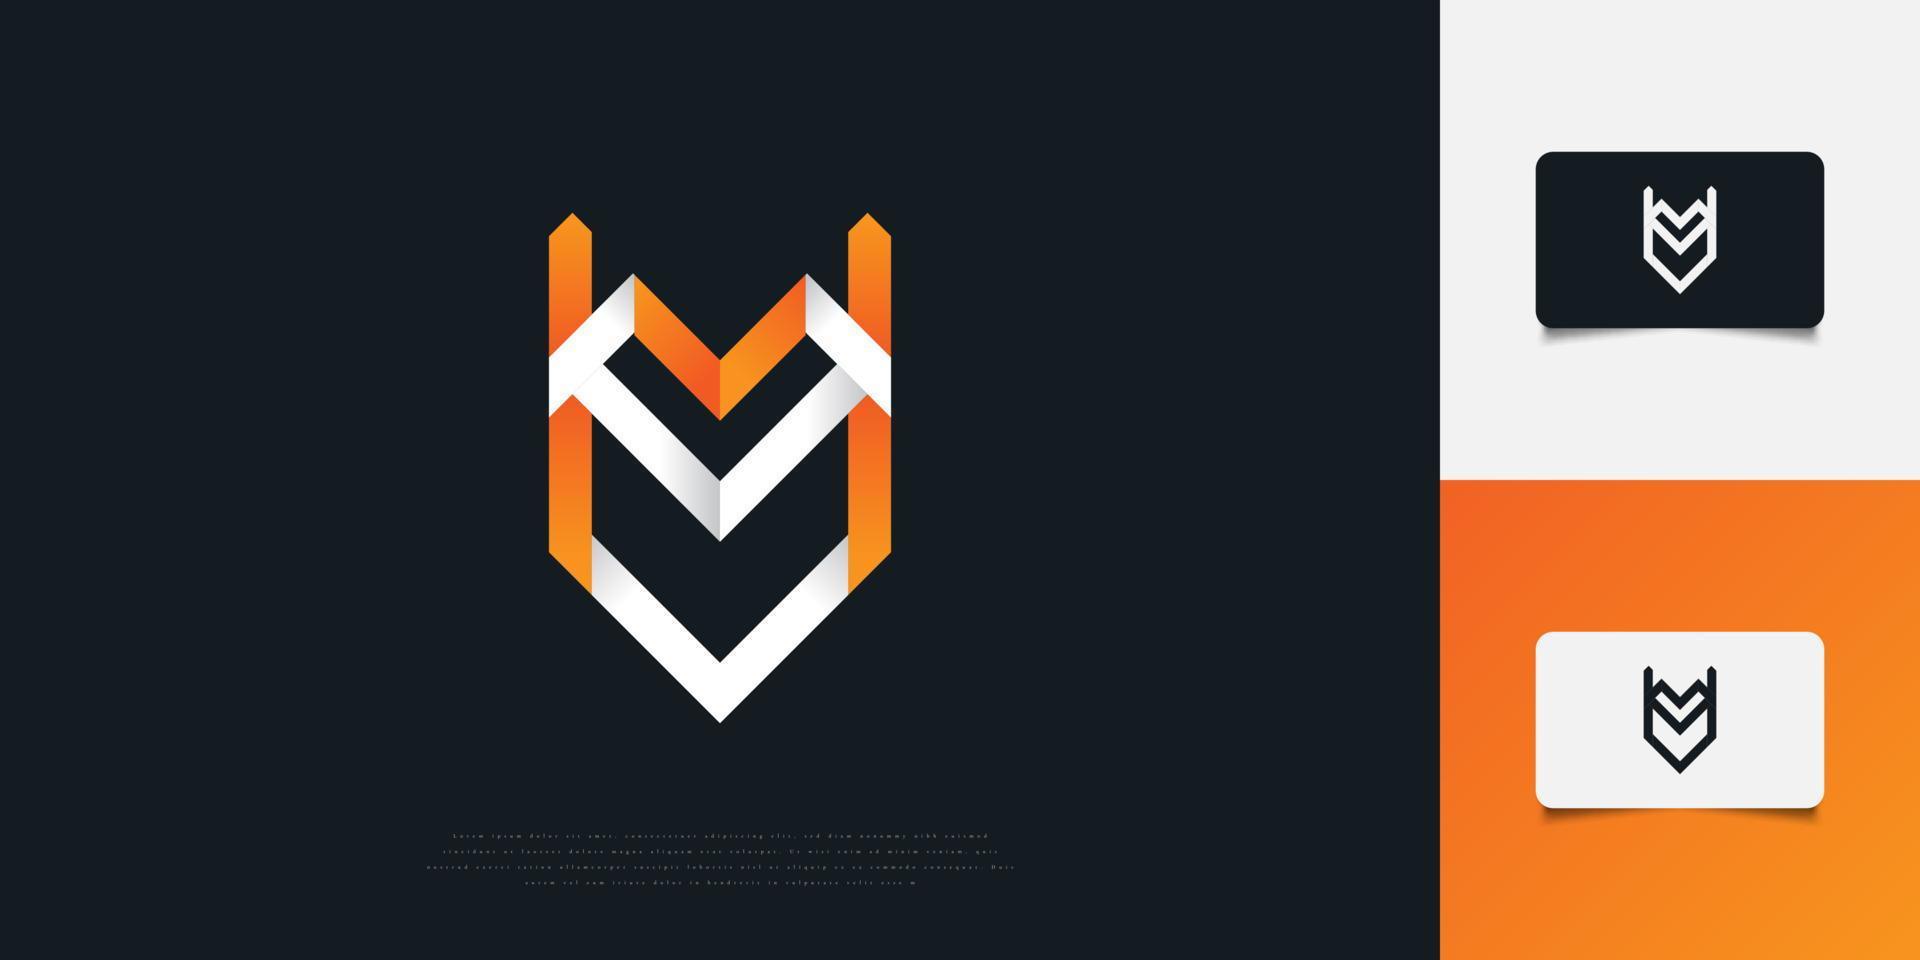 abstrato e moderno inicial letra vei design do logotipo em gradiente branco e laranja. modelo de design de logotipo de monograma vu ou uv. símbolo gráfico do alfabeto para identidade corporativa vetor